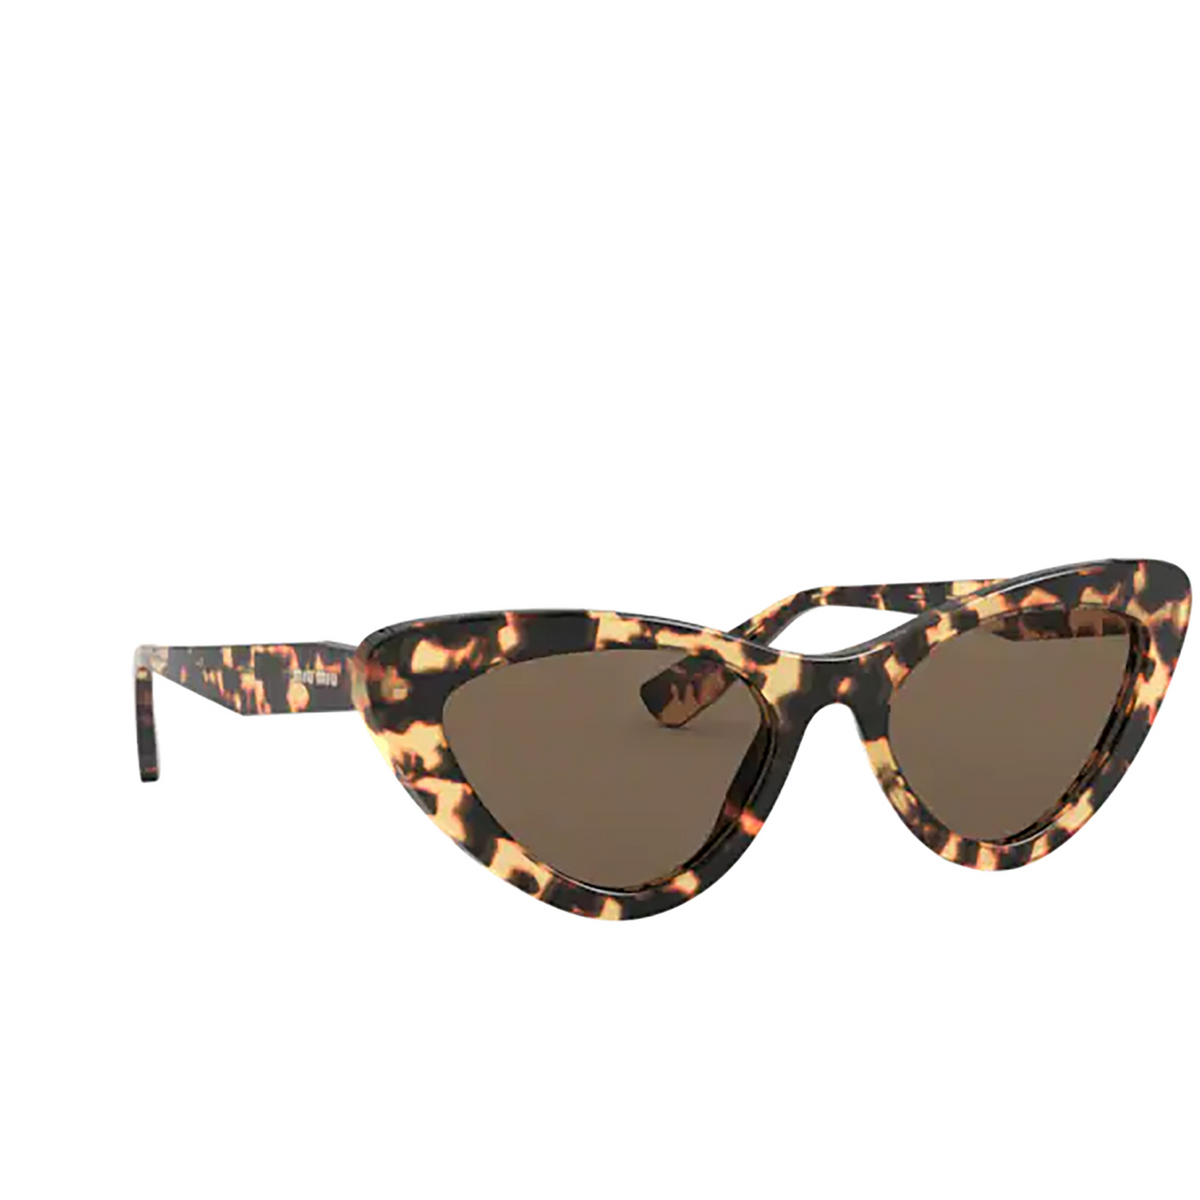 Miu Miu® Cat-eye Sunglasses: MU 01VS color Light Havana 7S08C1 - three-quarters view.